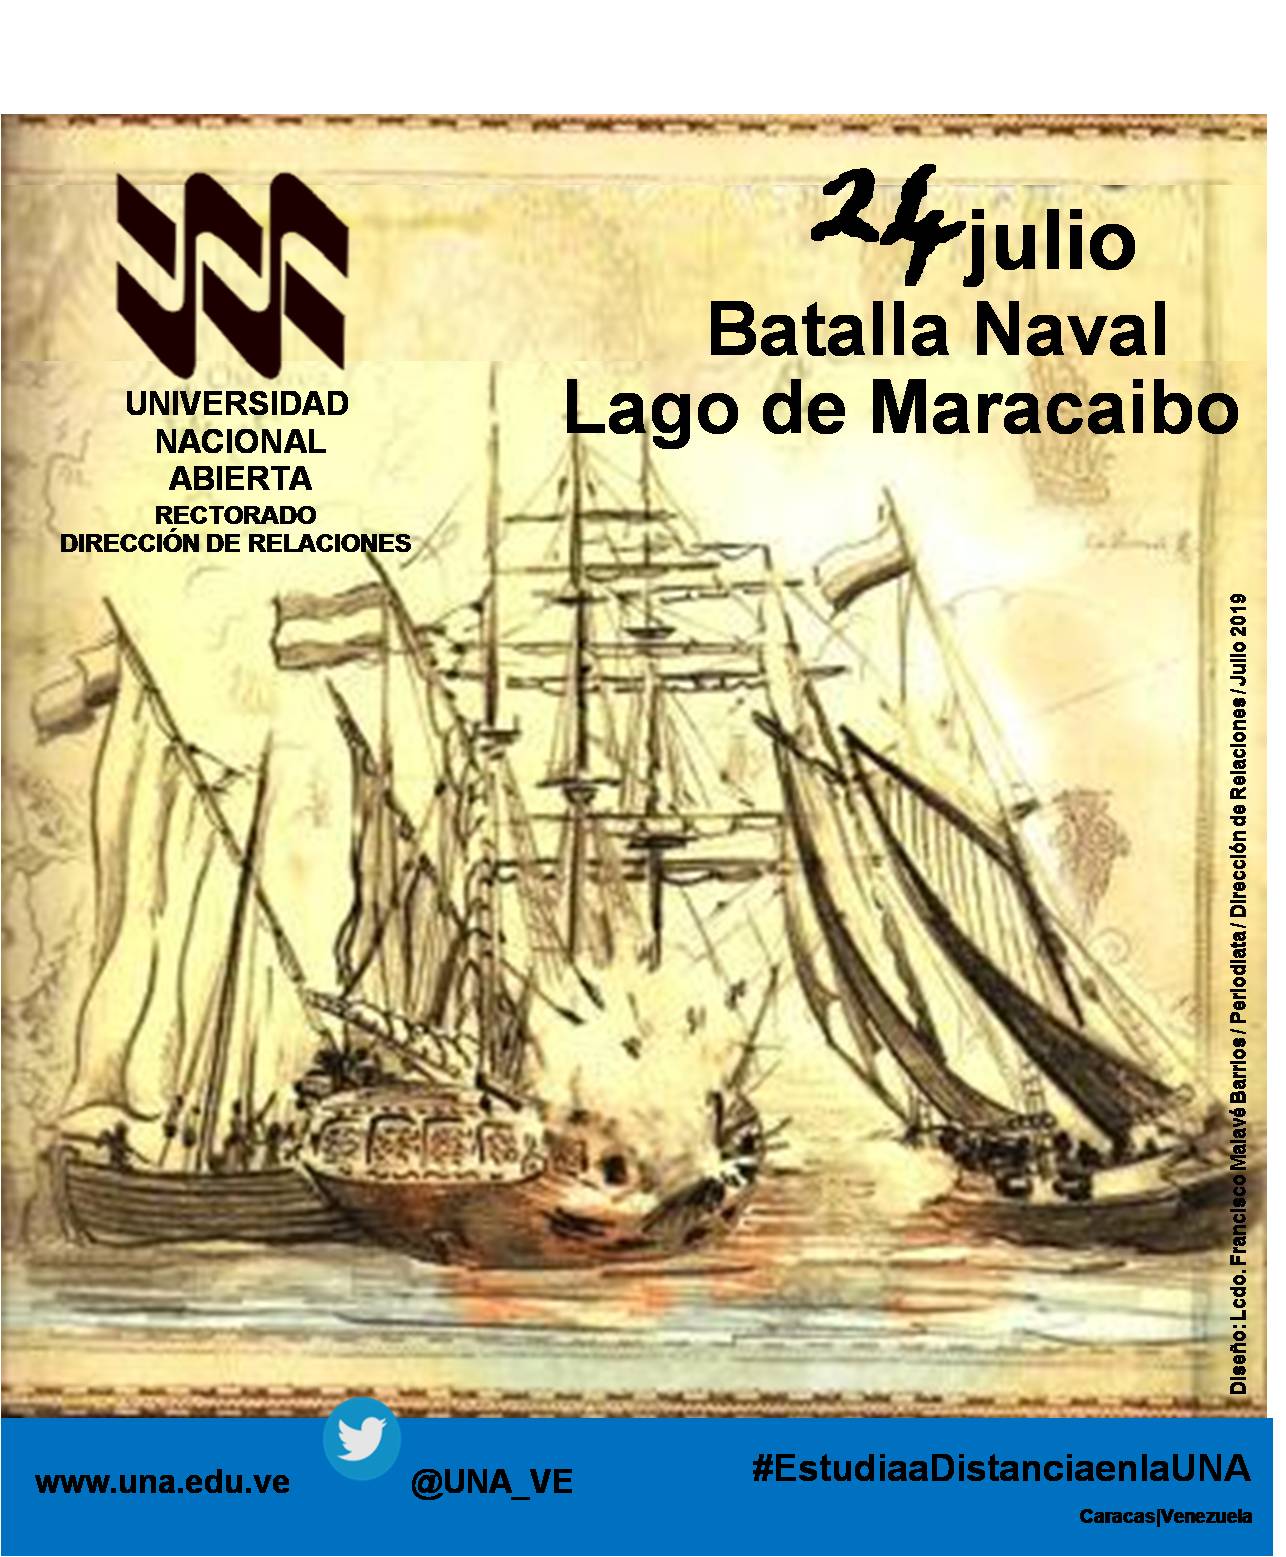 Dia de la Batalla Naval de Maracaibo